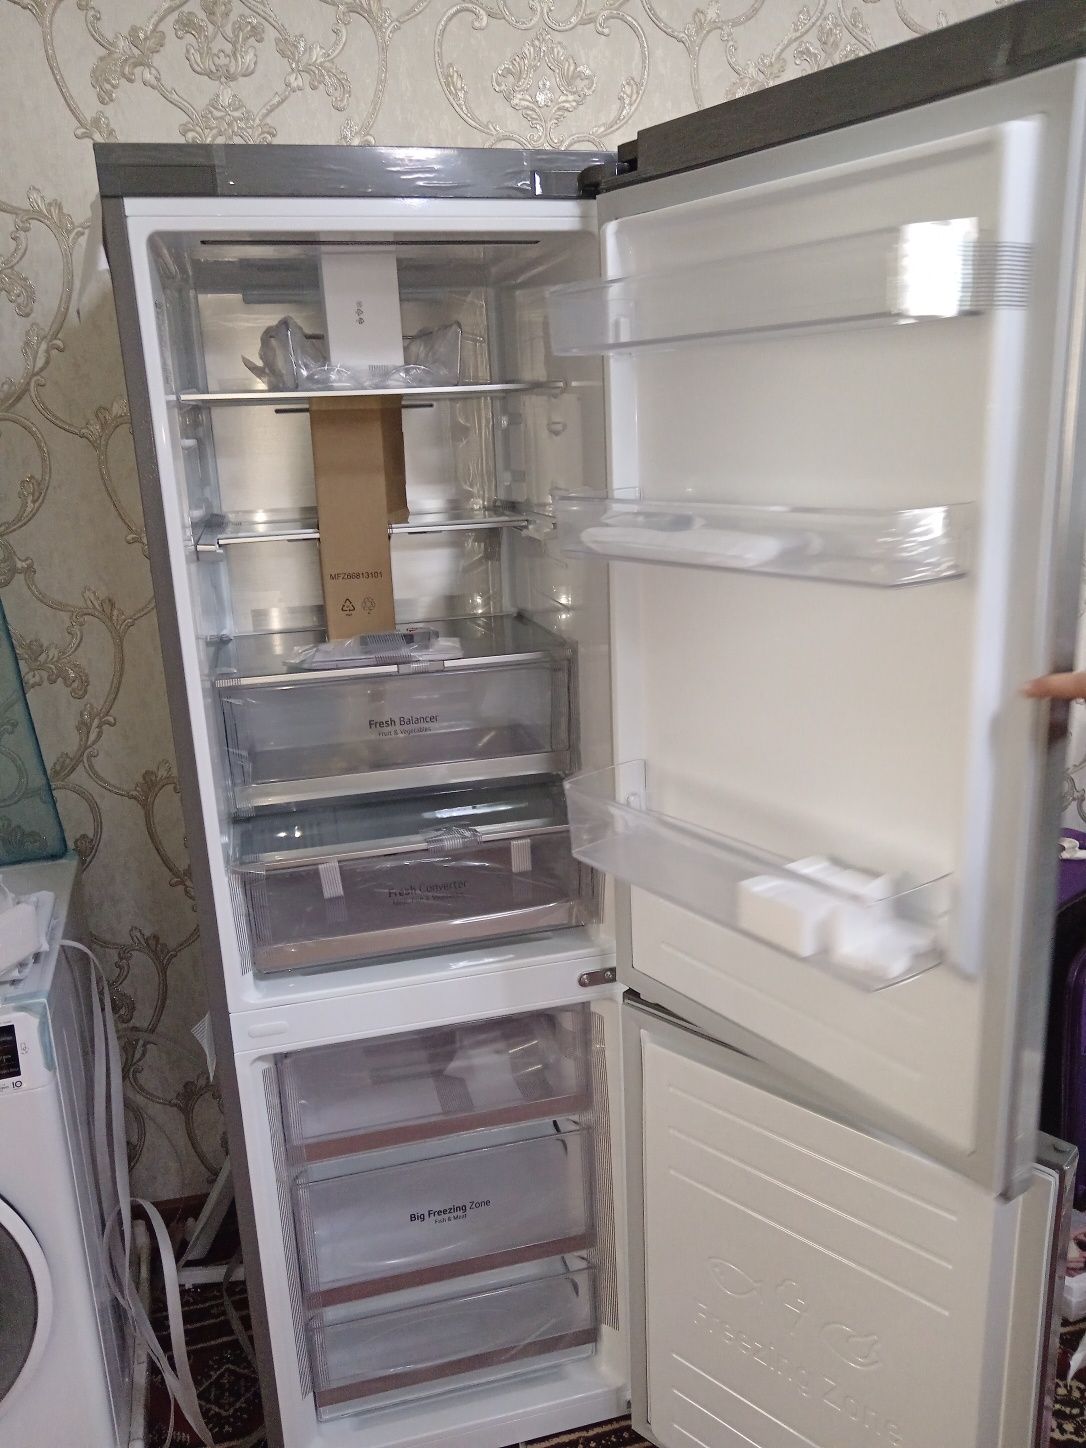 2 этажлы холодильник сатылады новый каровка м.н турипты бахасы 10 млн